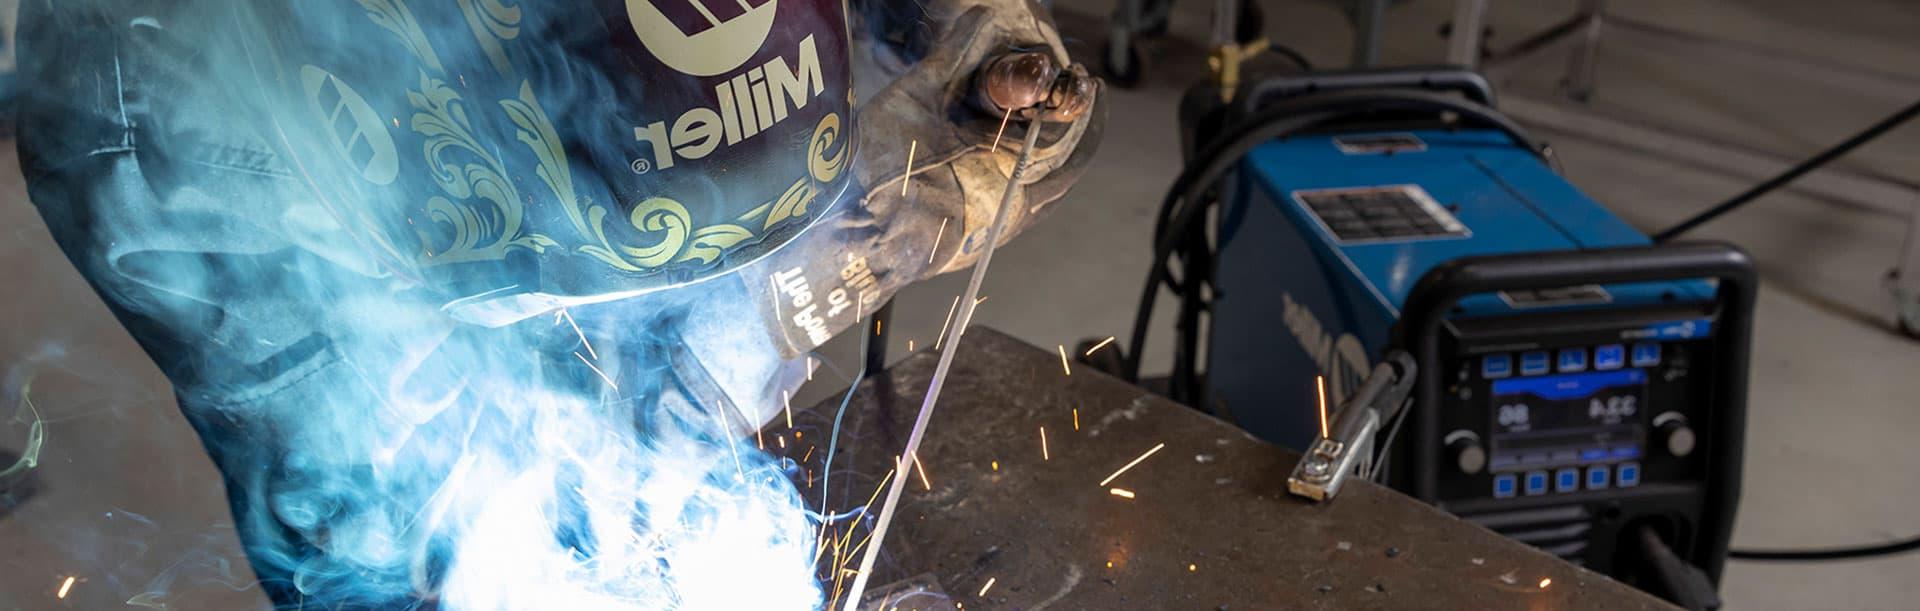 person in welding helmet welding with sparks flying